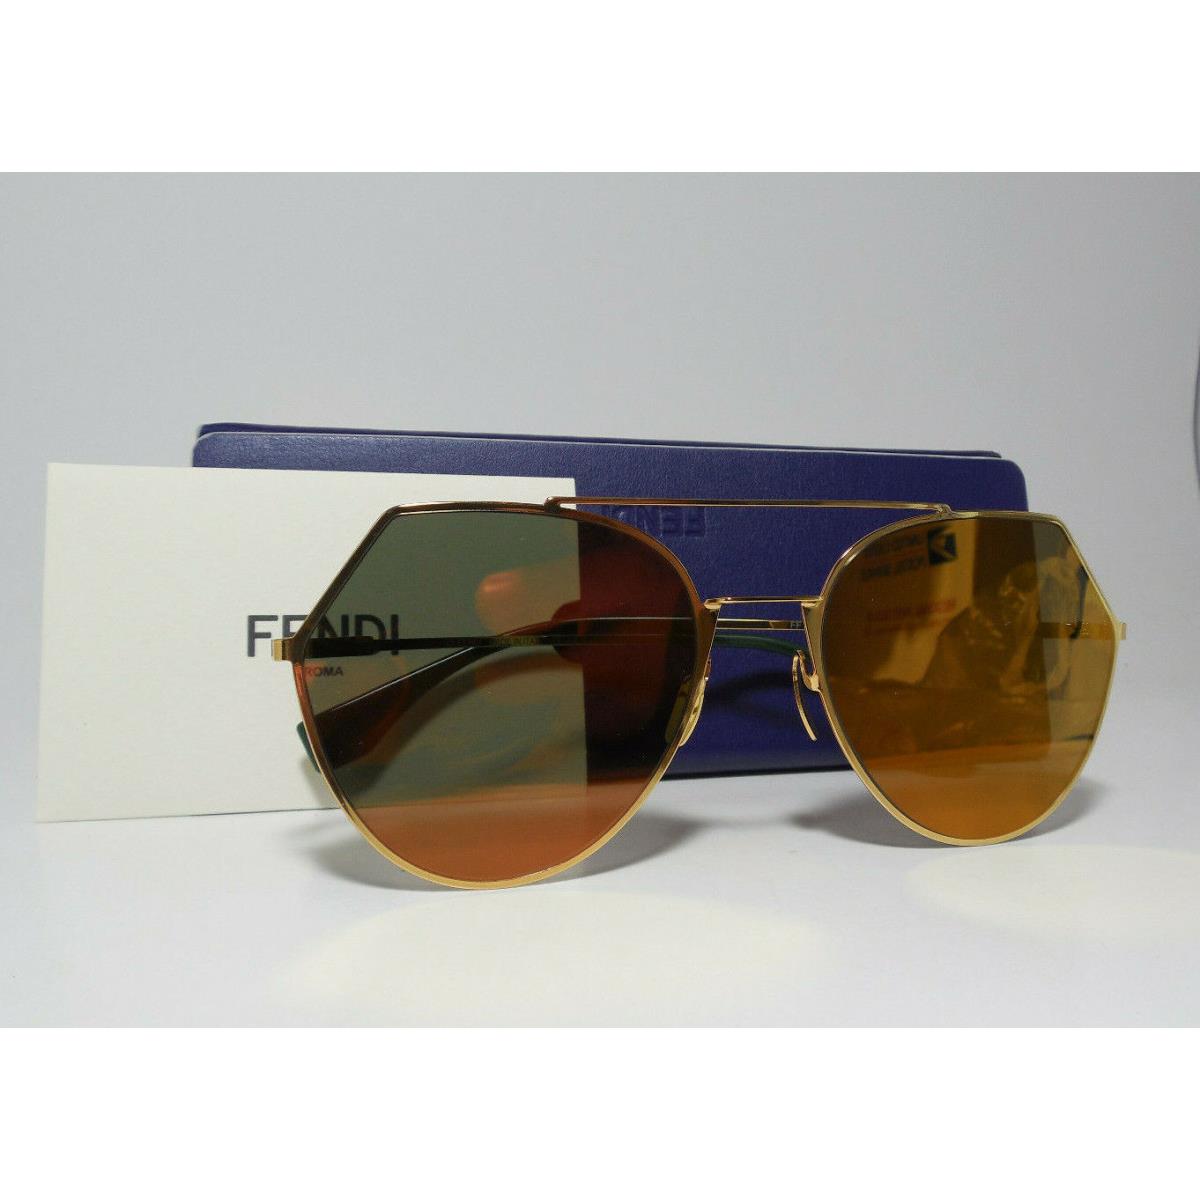 Fendi 0194/S 001 Yellow Gold Sunglasses 55mm Frame